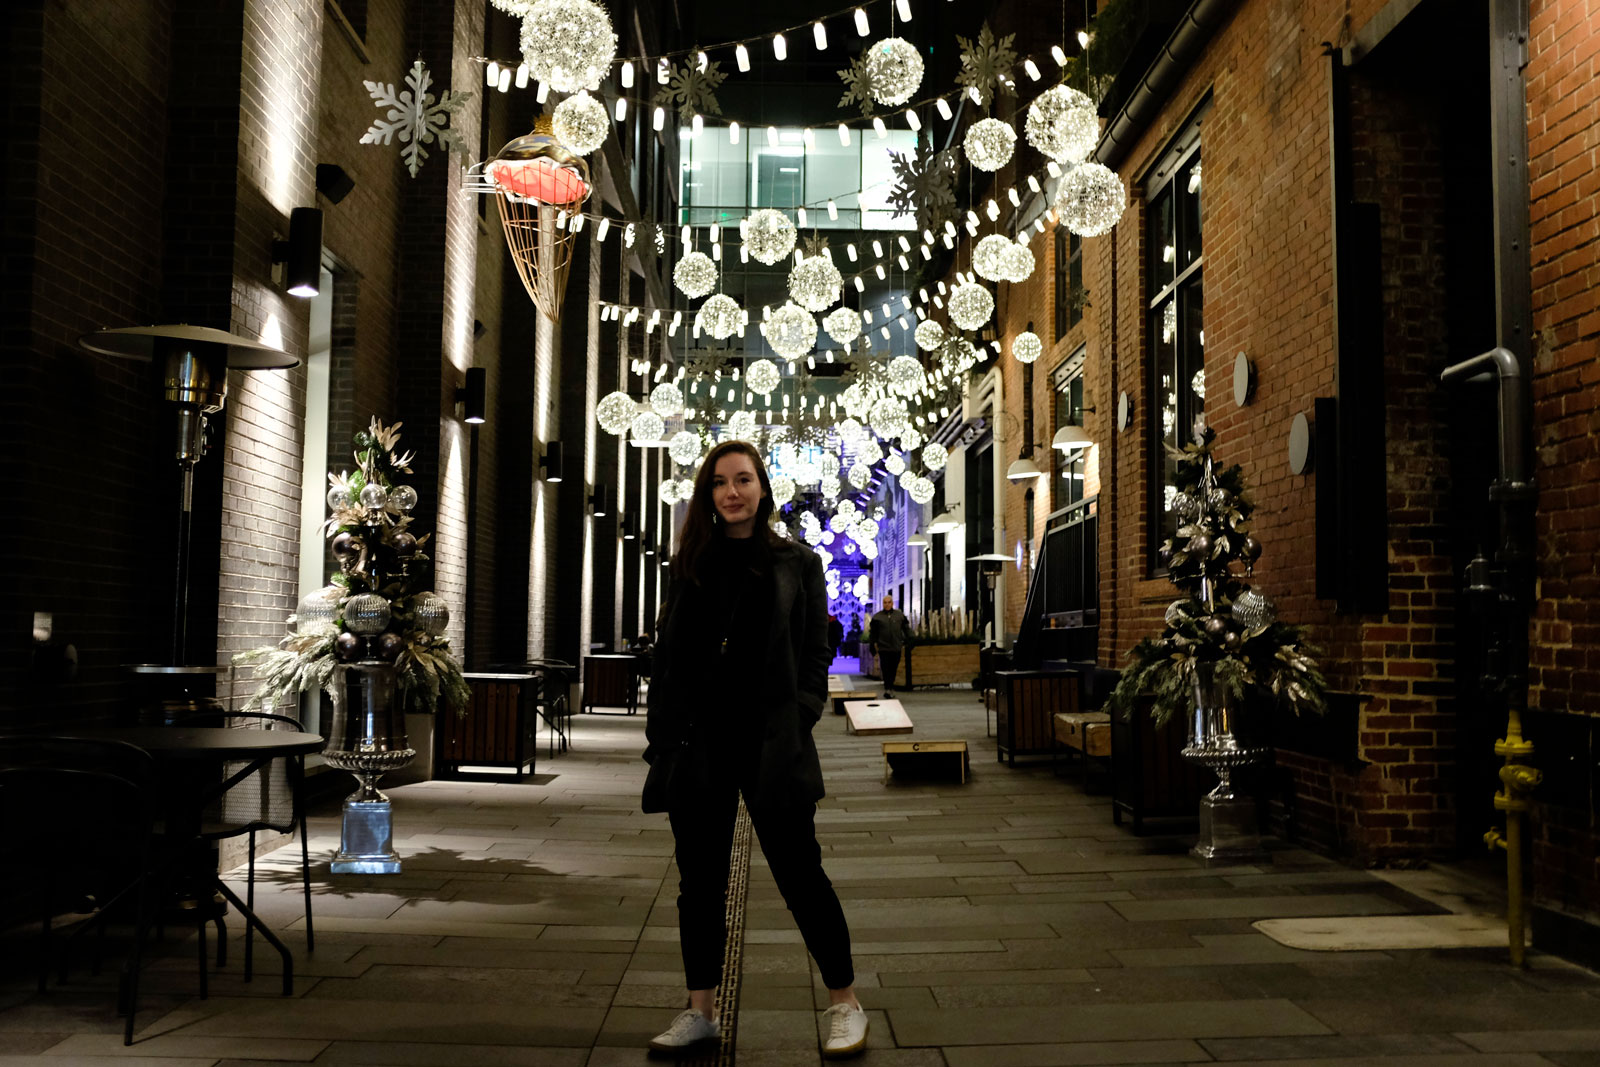 Alyssa stands in an alleyway lit with lights in Denver